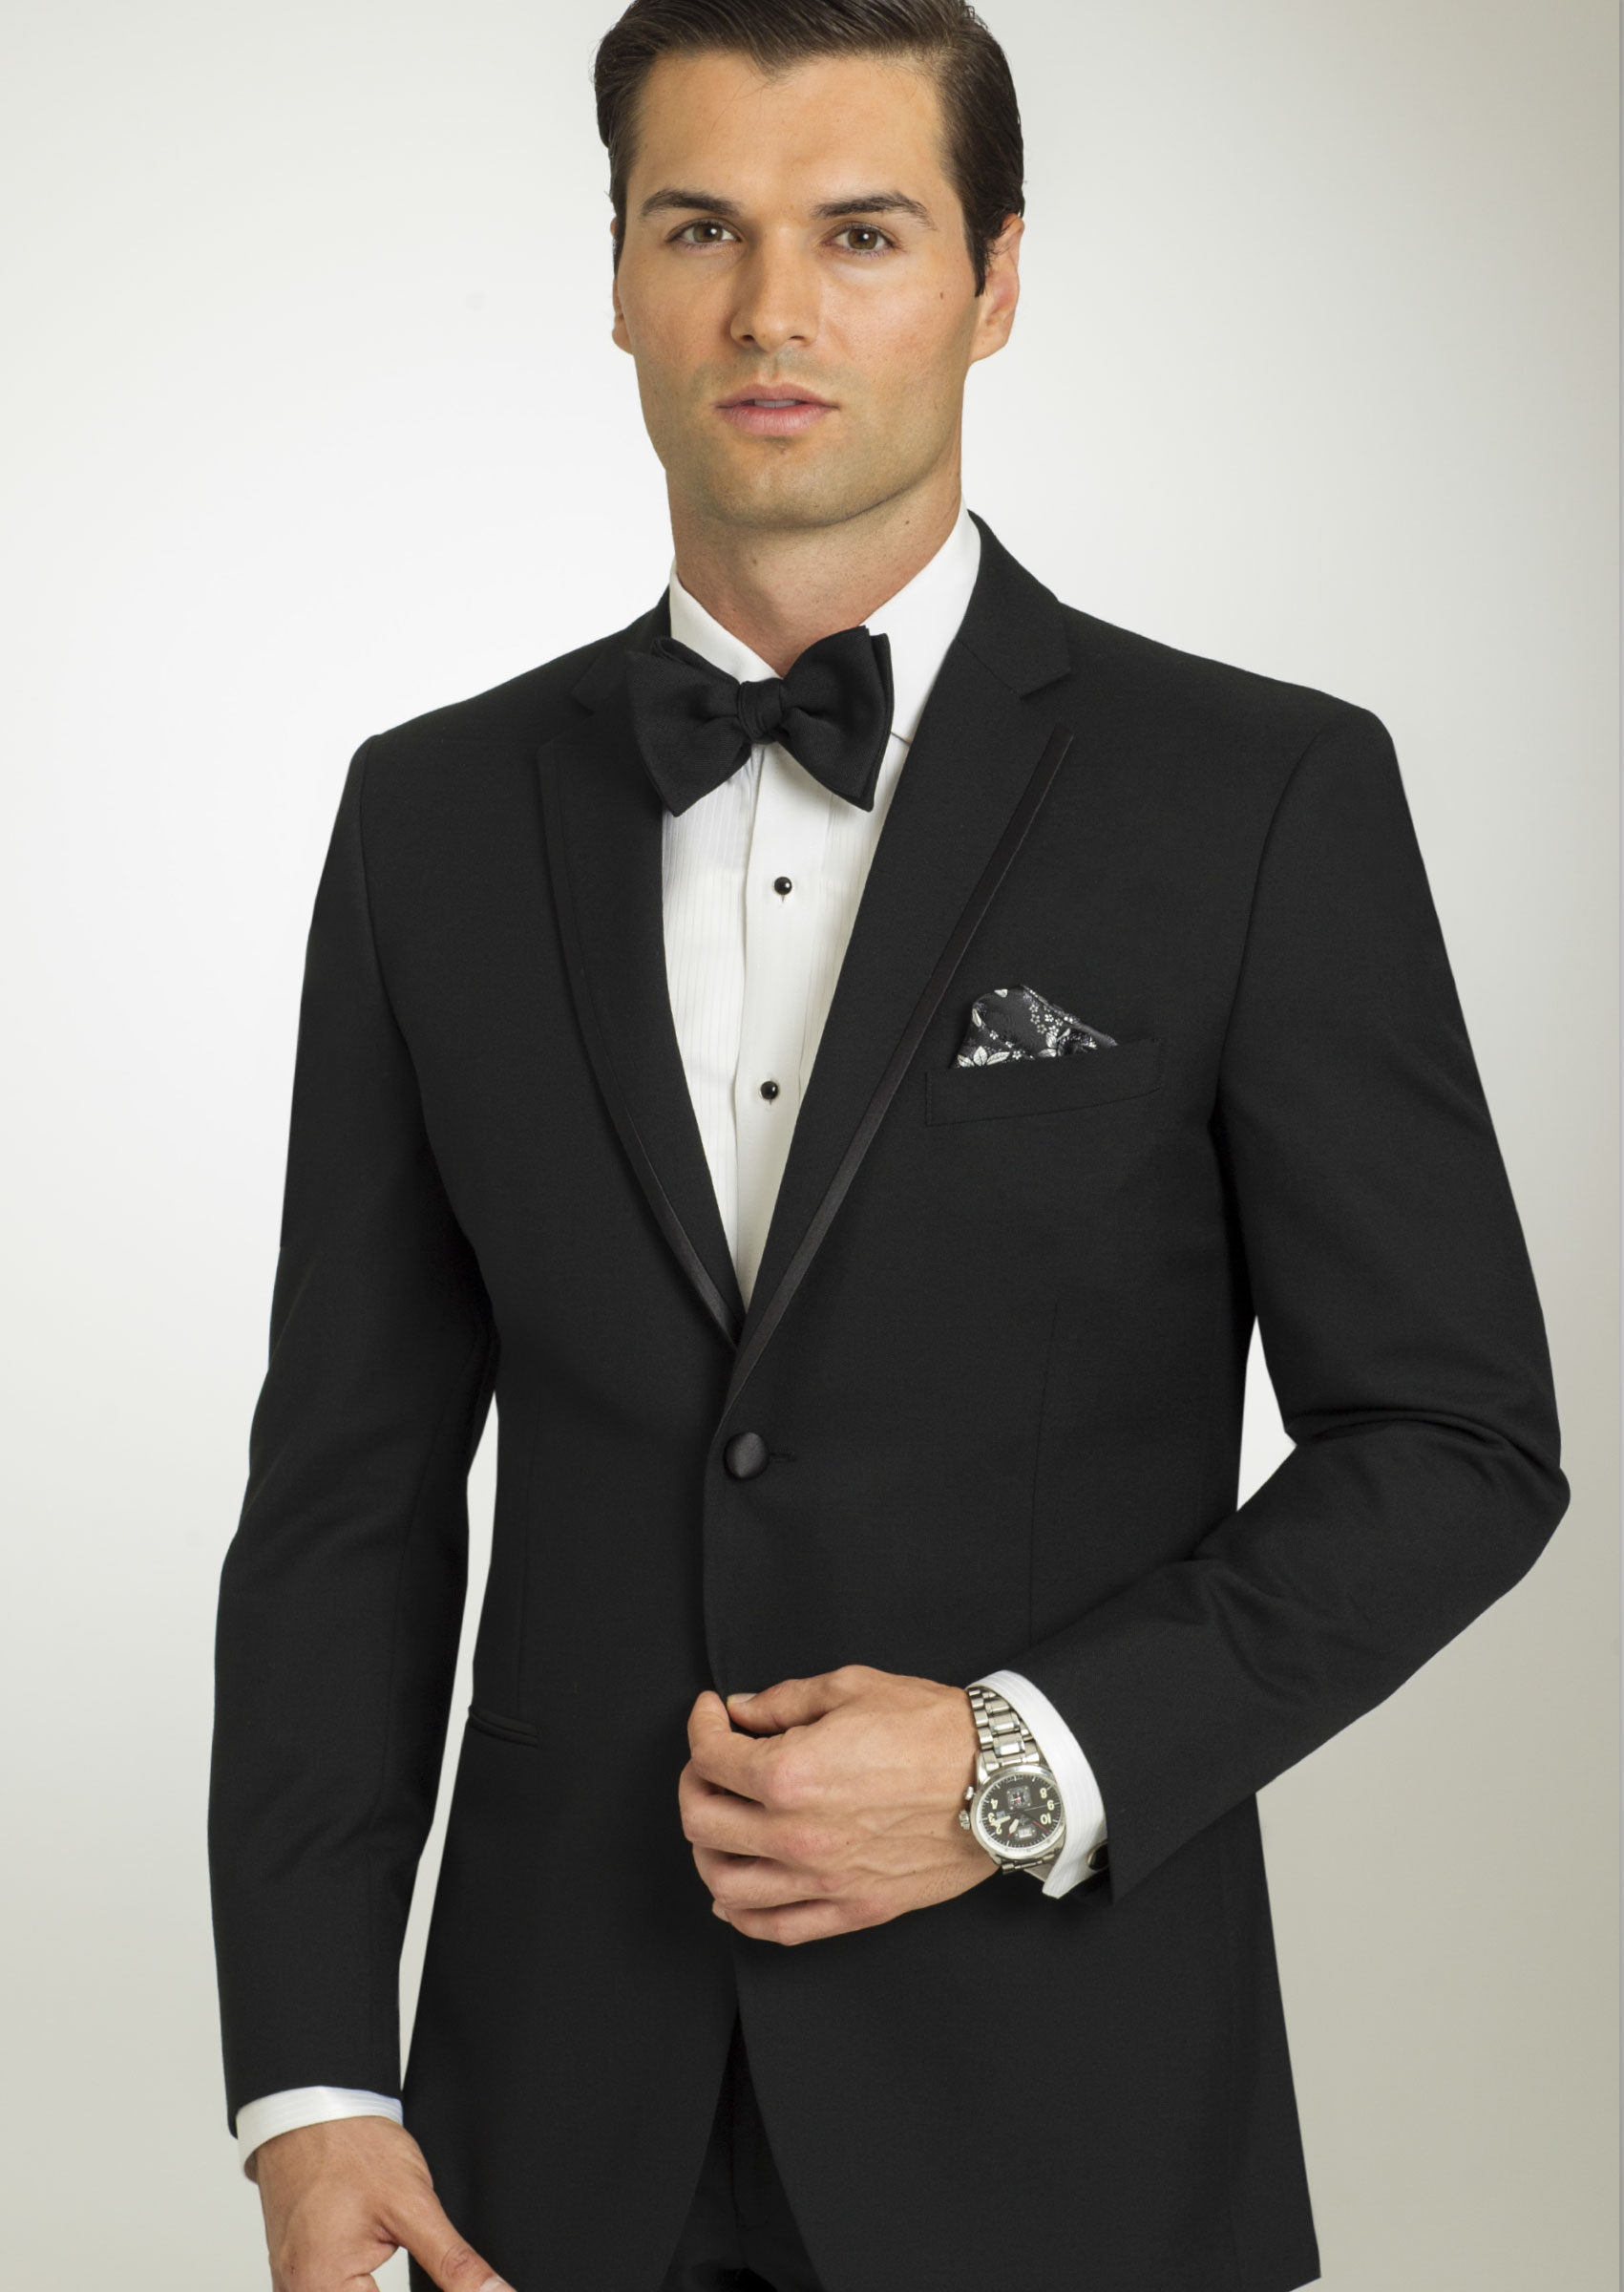 Designer Page – Savvi | Tuxedo Rental, Suits and Formalwear